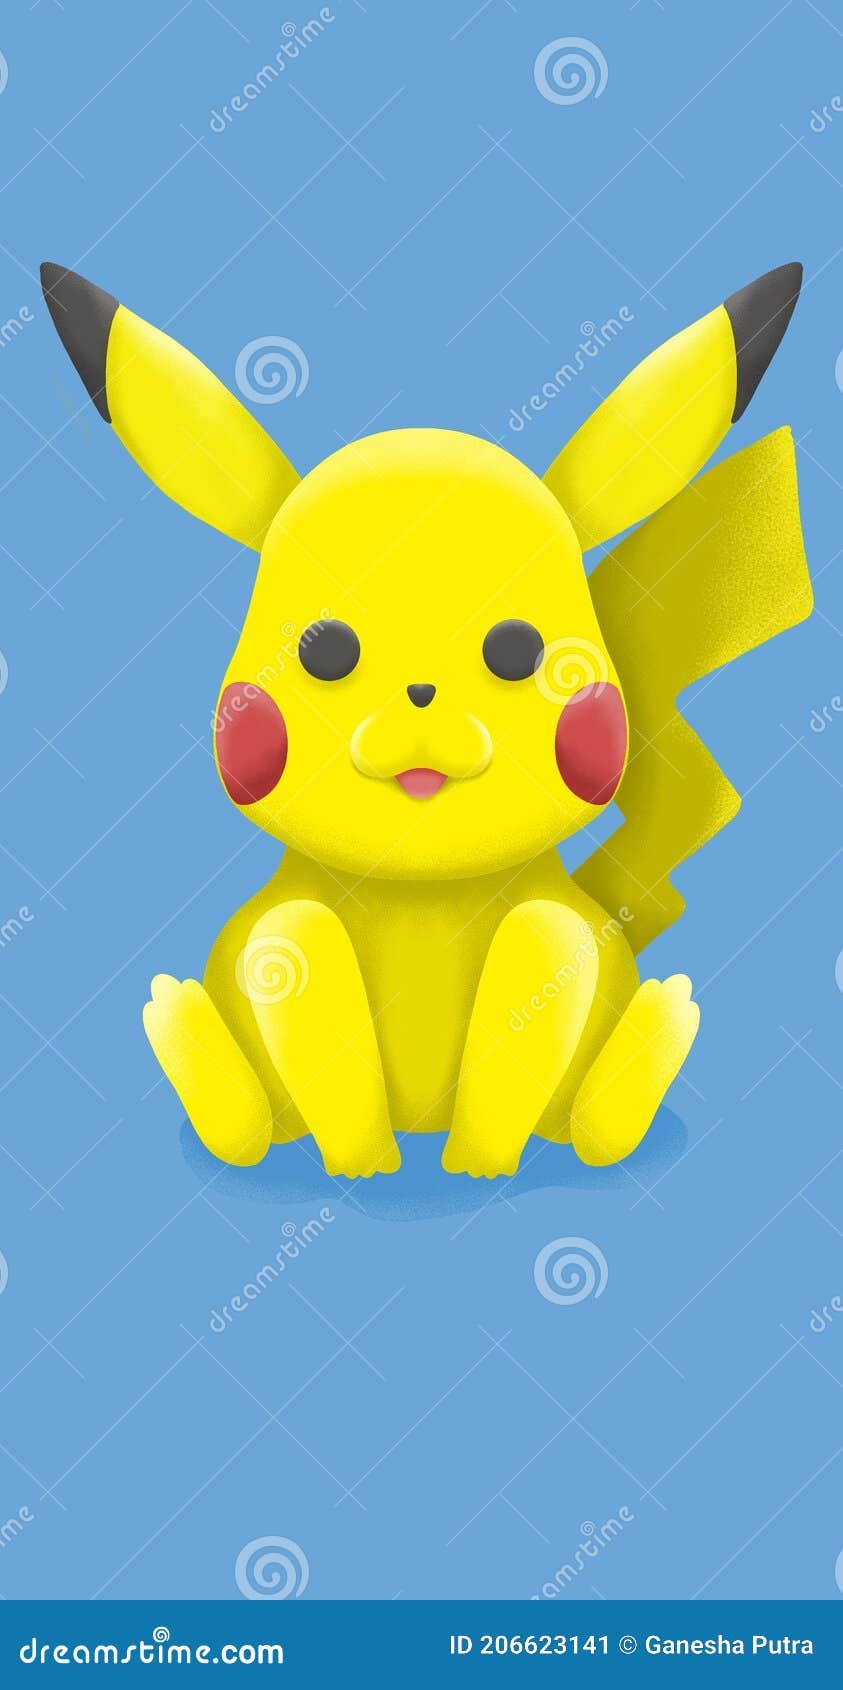 Cute Pikachu Pokemon Flat Design Editorial Photo - Image of ...